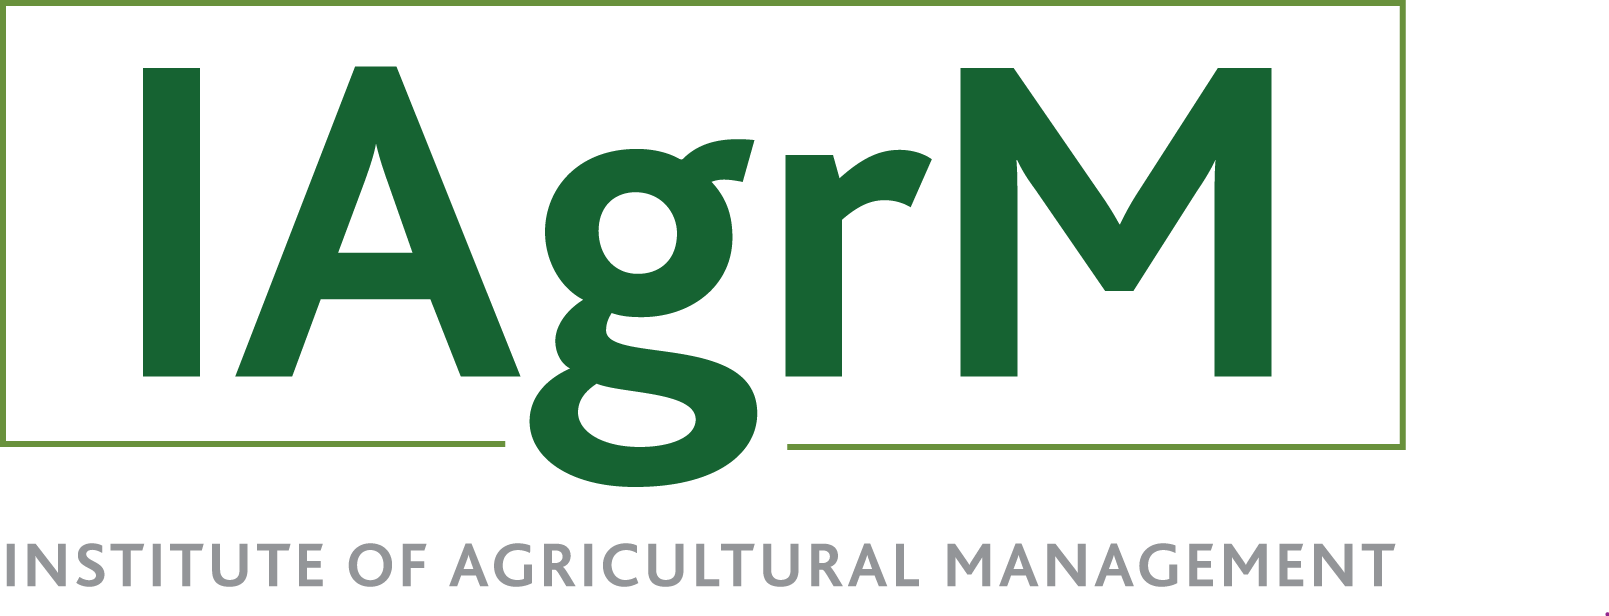 Institute of Agricultural Management